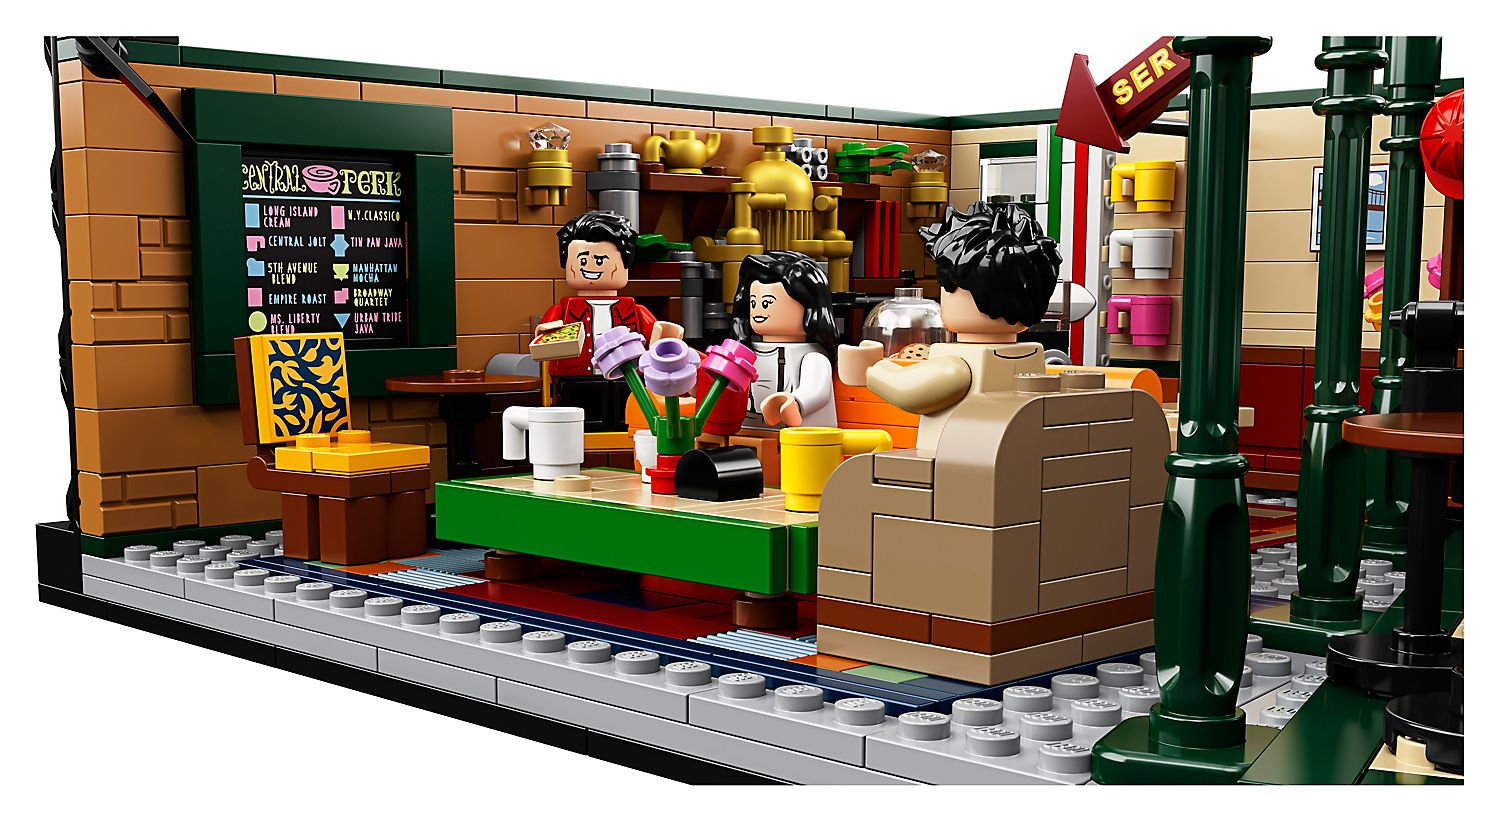 LEGO FRIENDS Central Perk 21319